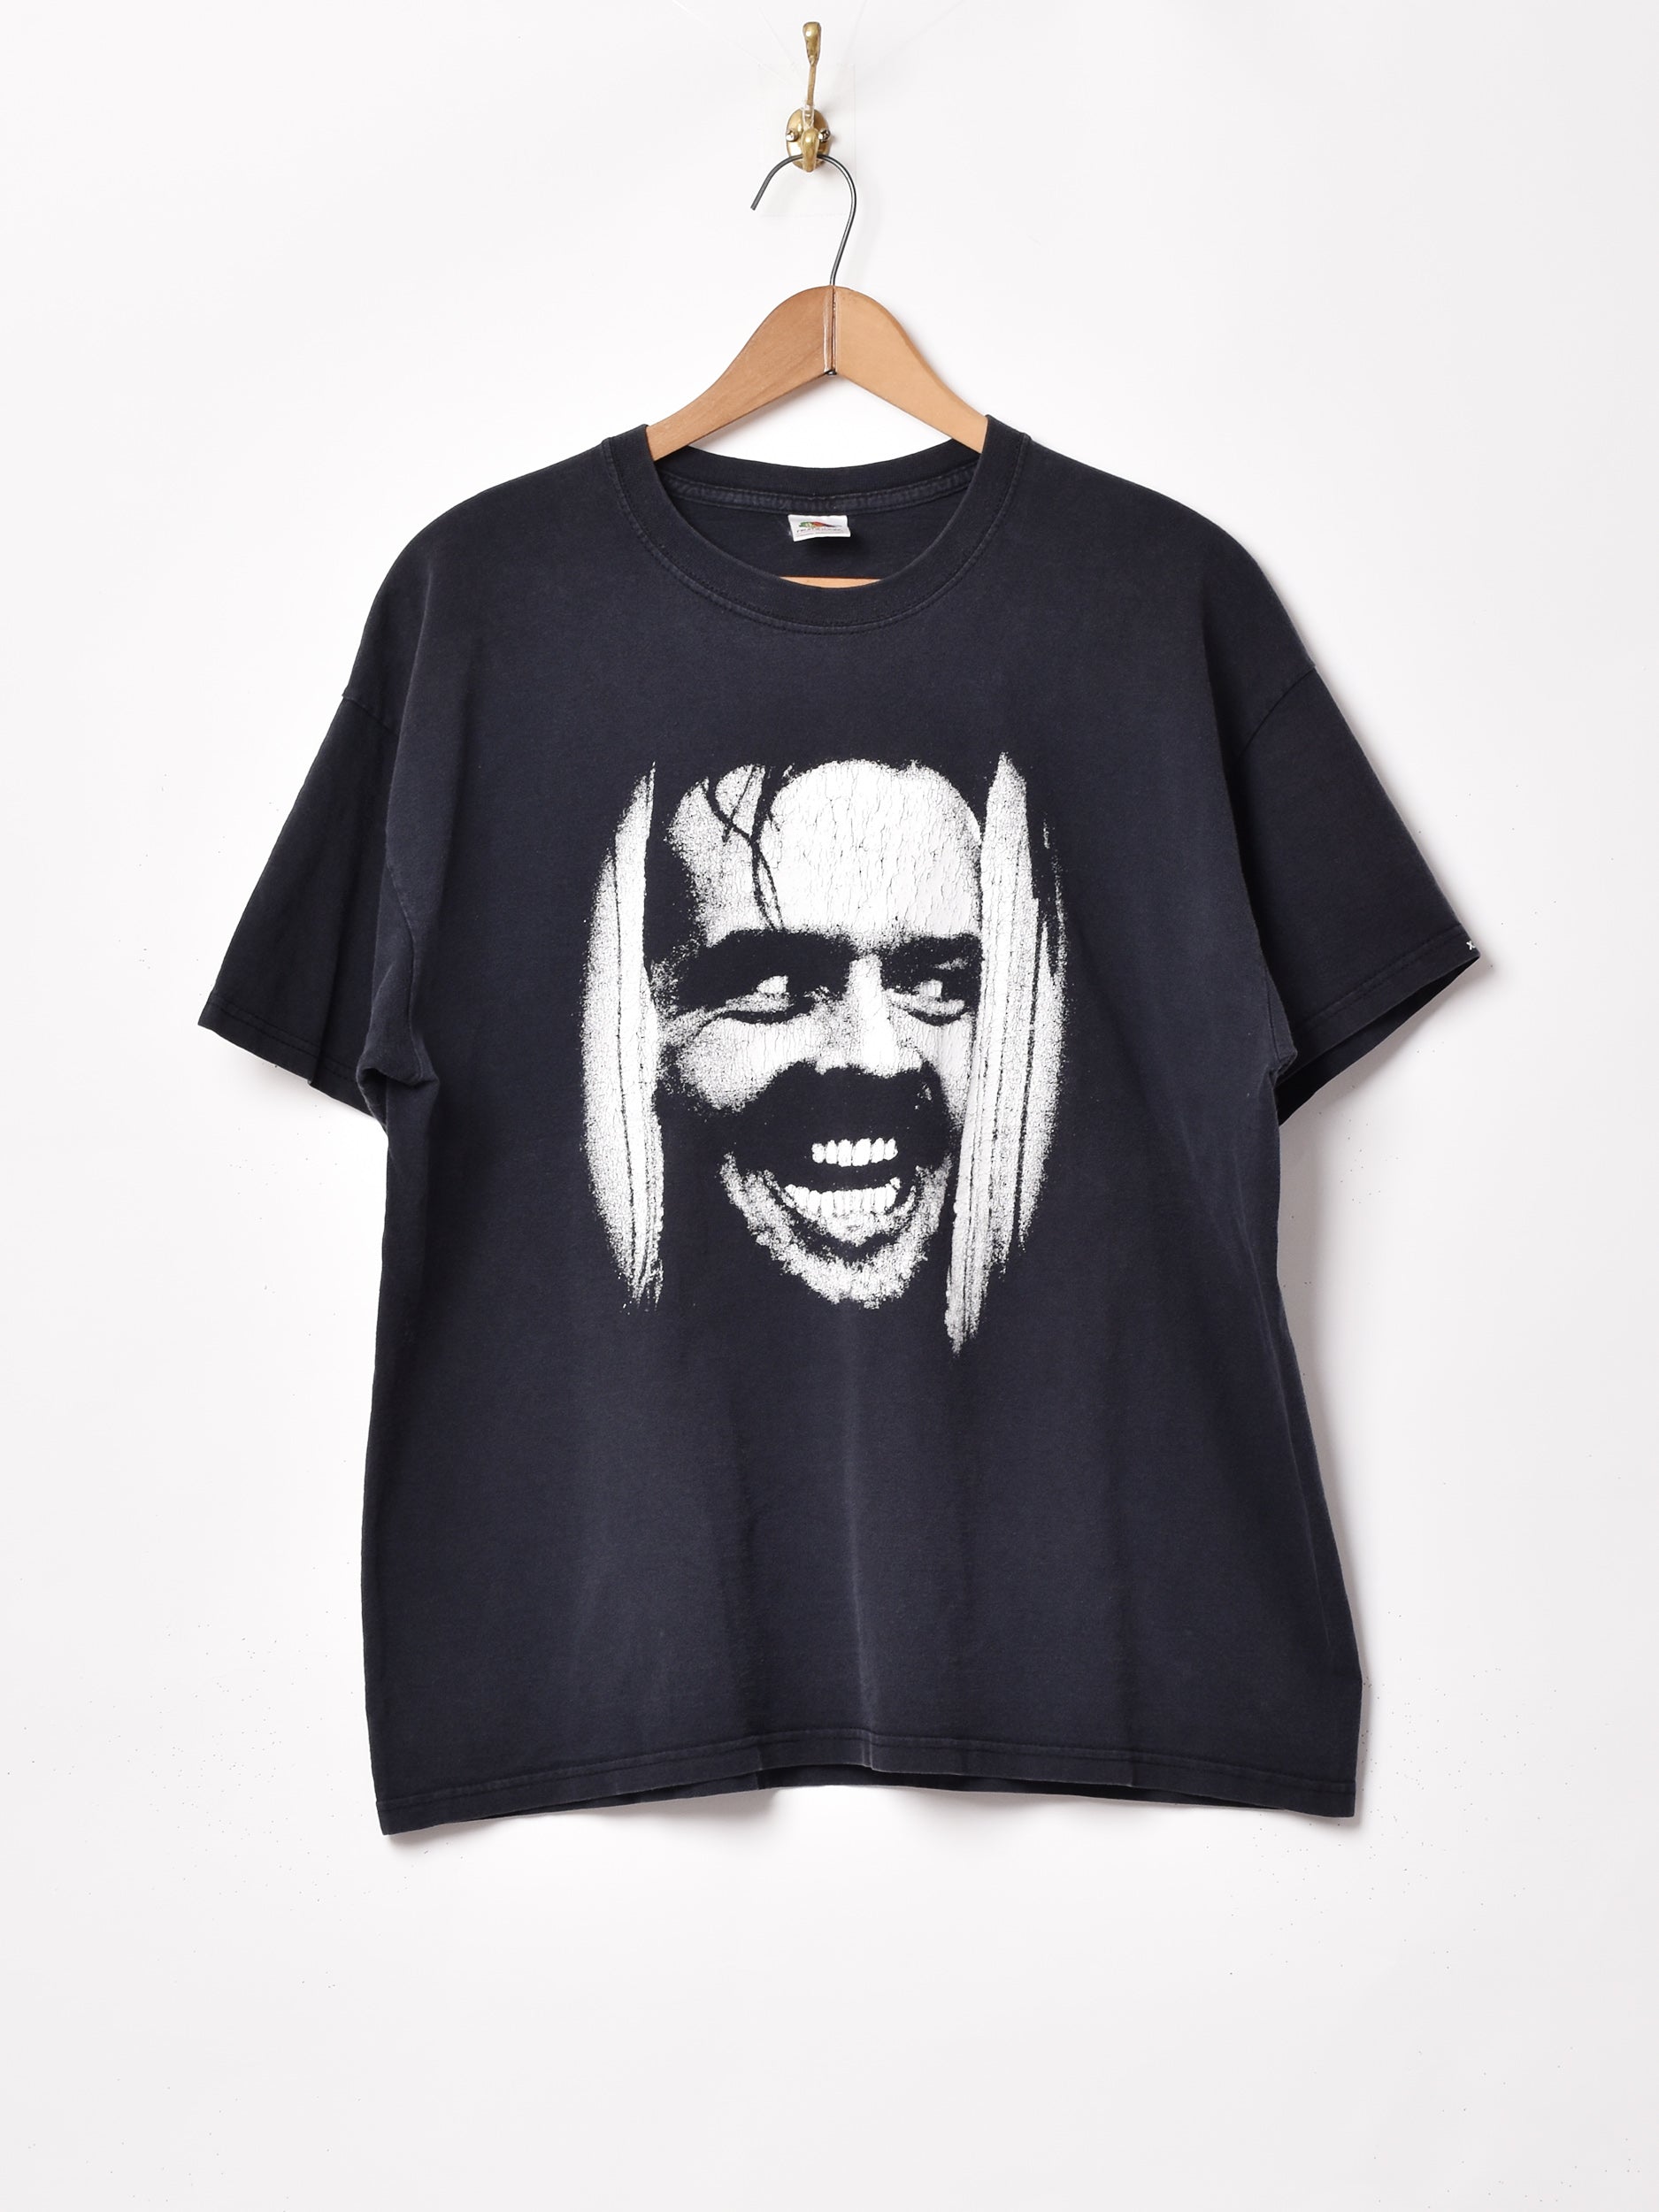 Shining” ムービーTシャツ – 古着屋Top of the Hillのネット通販サイト